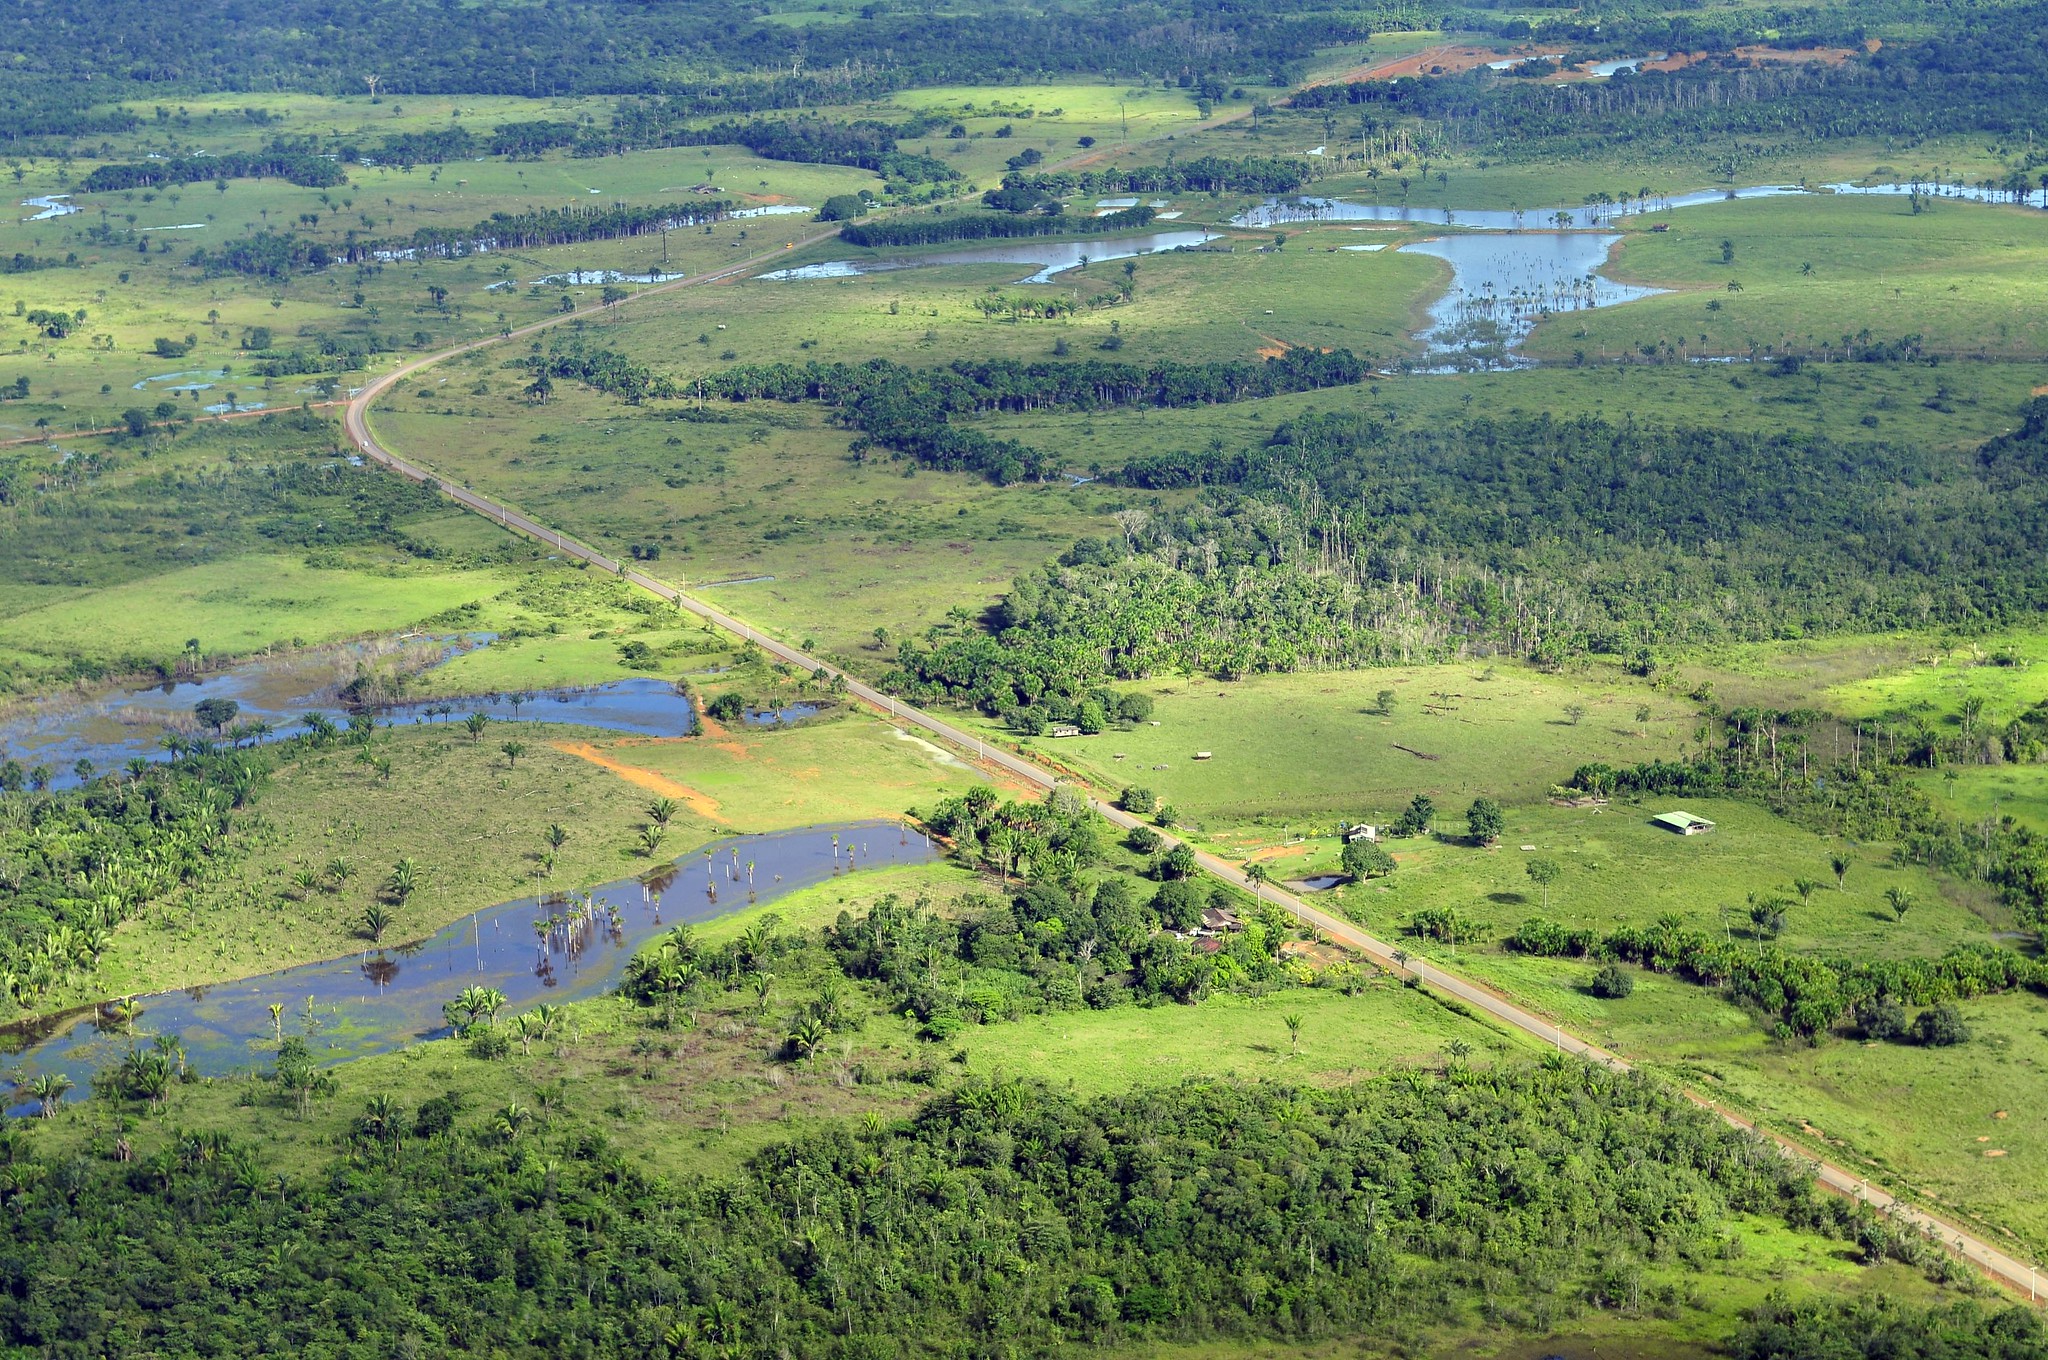 The Amazon rainforest near Manaus, Brazil